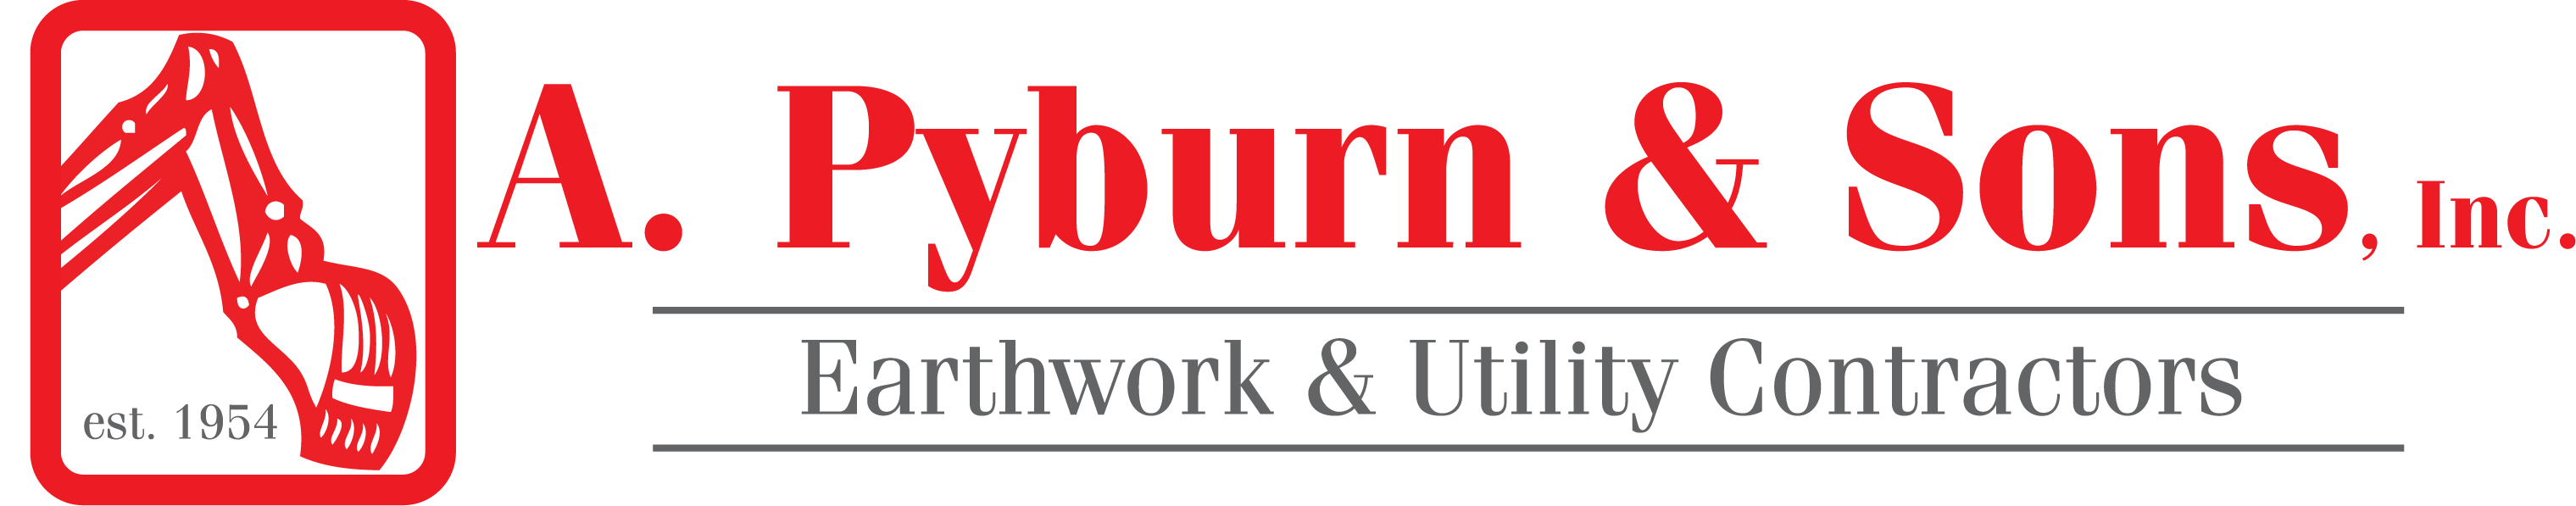 Arthur Pyburn & Sons, Inc. Logo